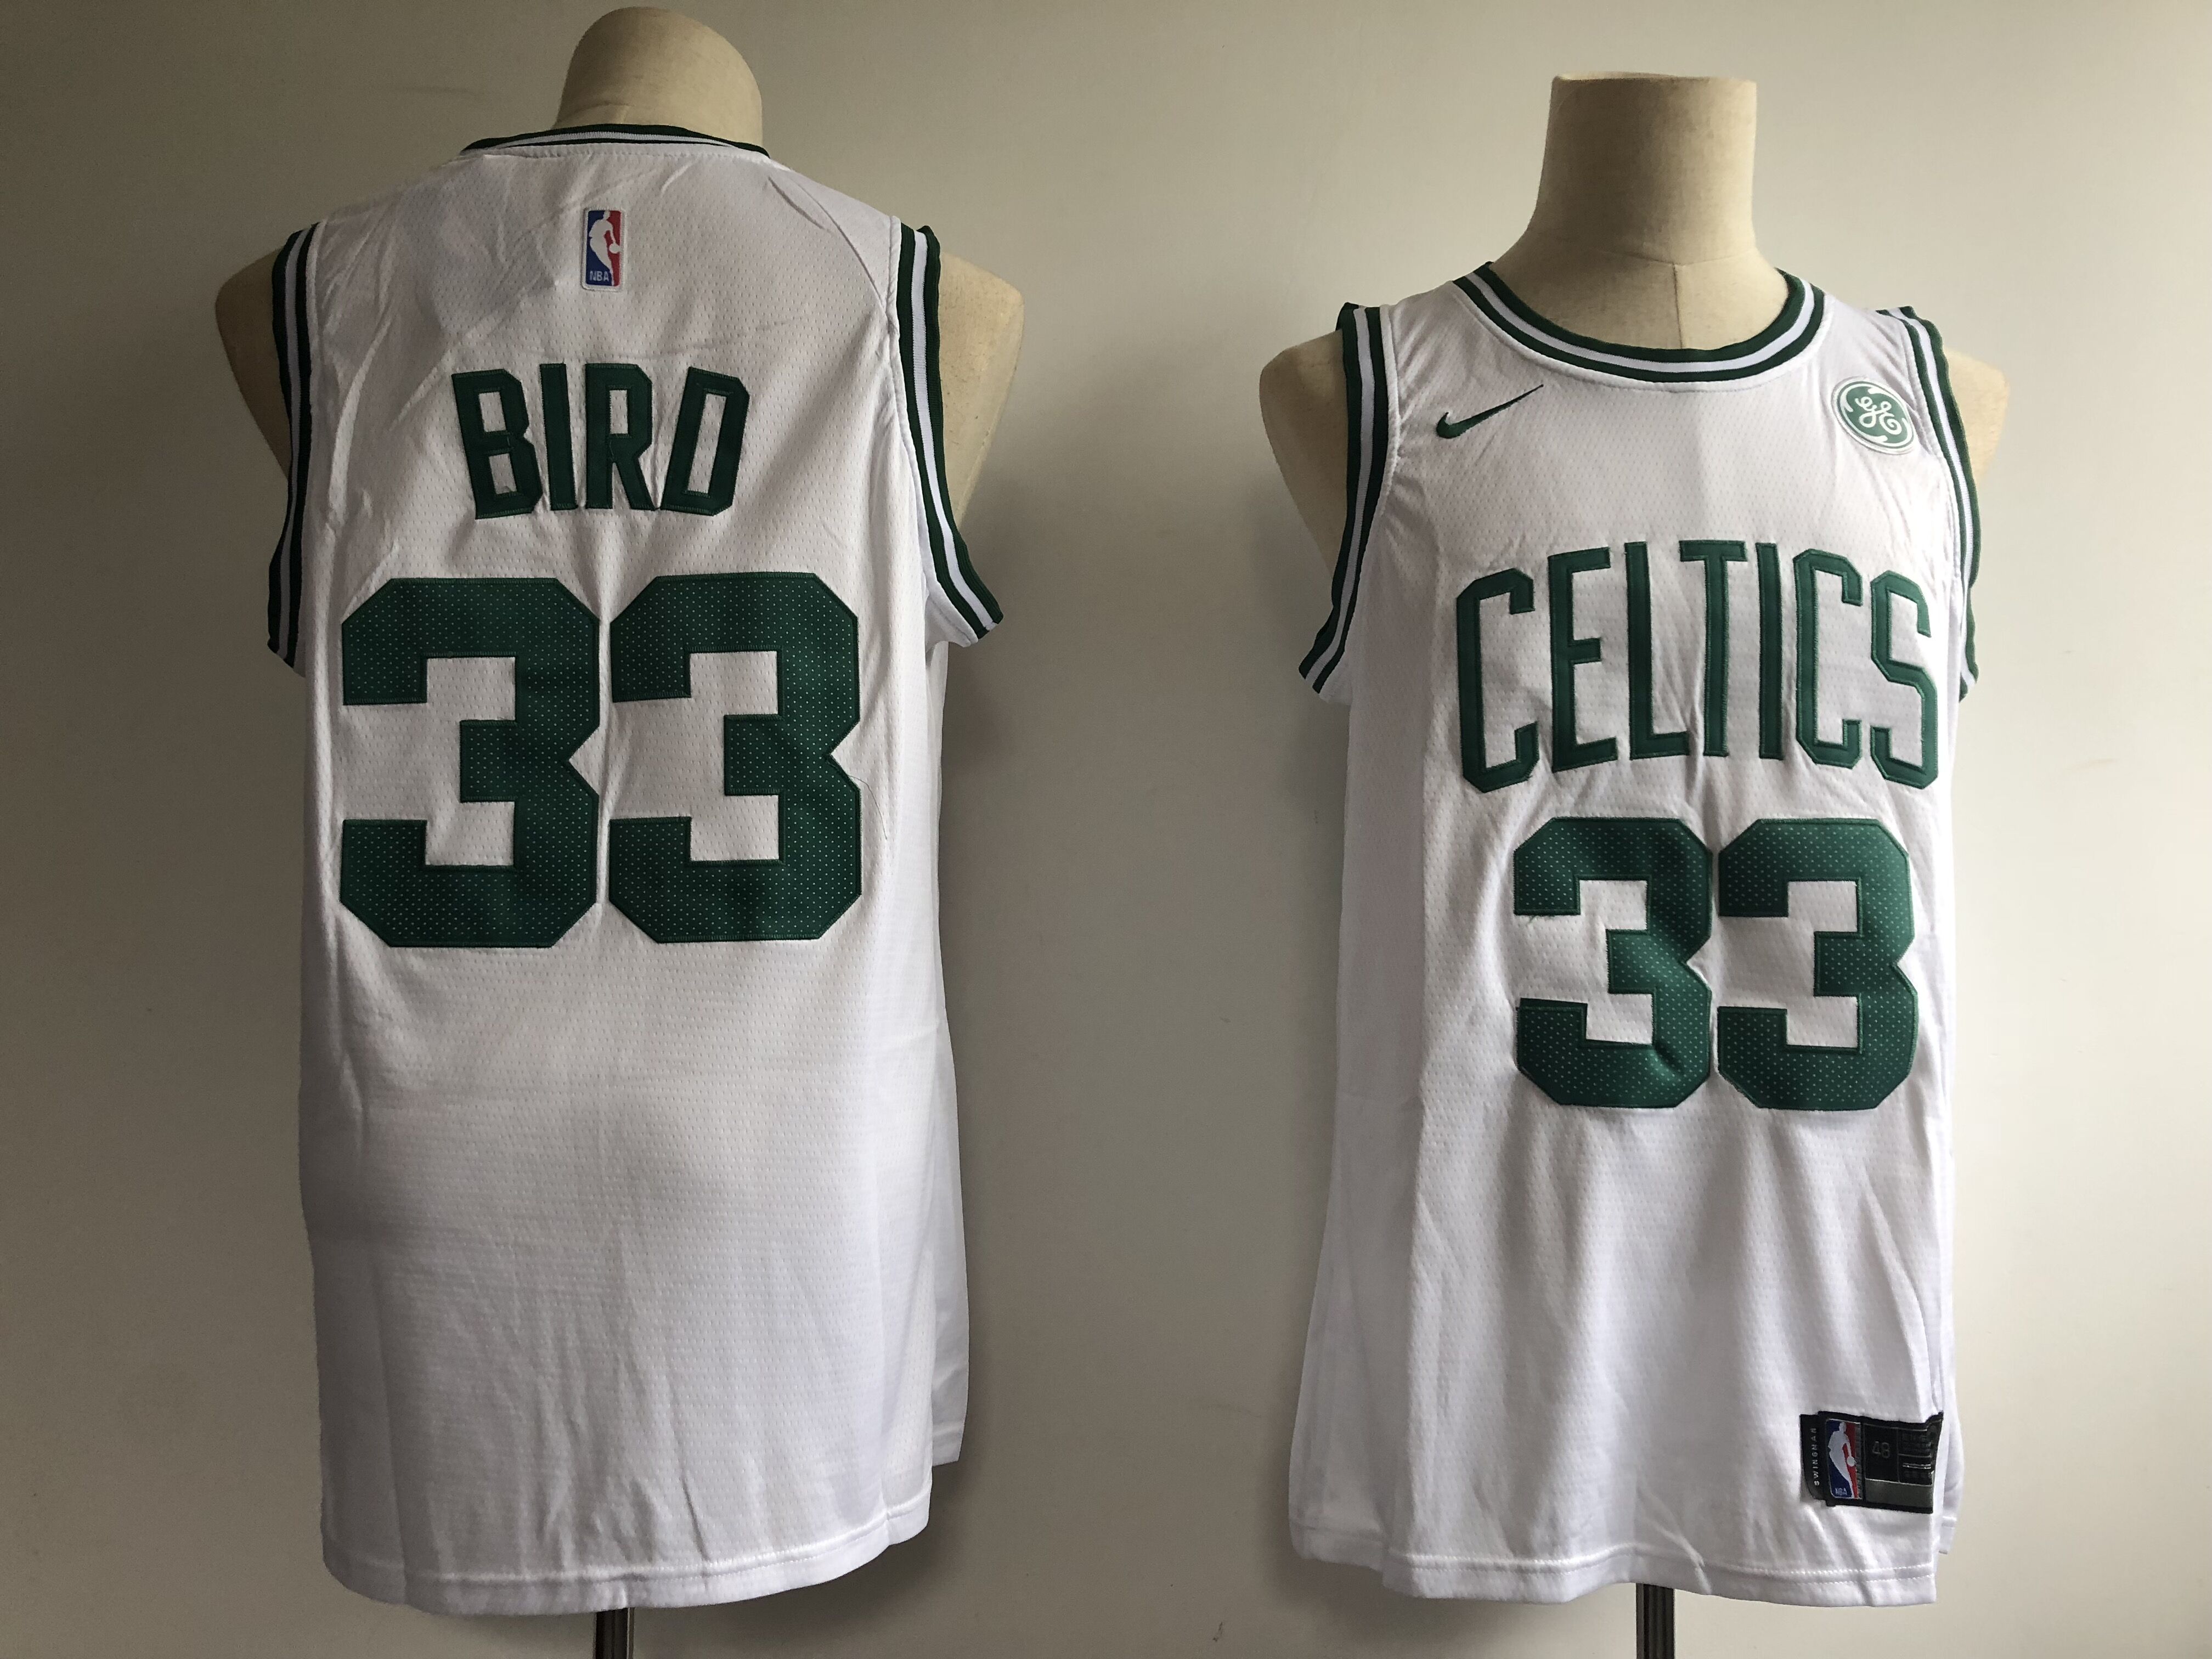 Men's Boston Celtics #33 Larry Bird White Swingman Stitched NBA Jersey